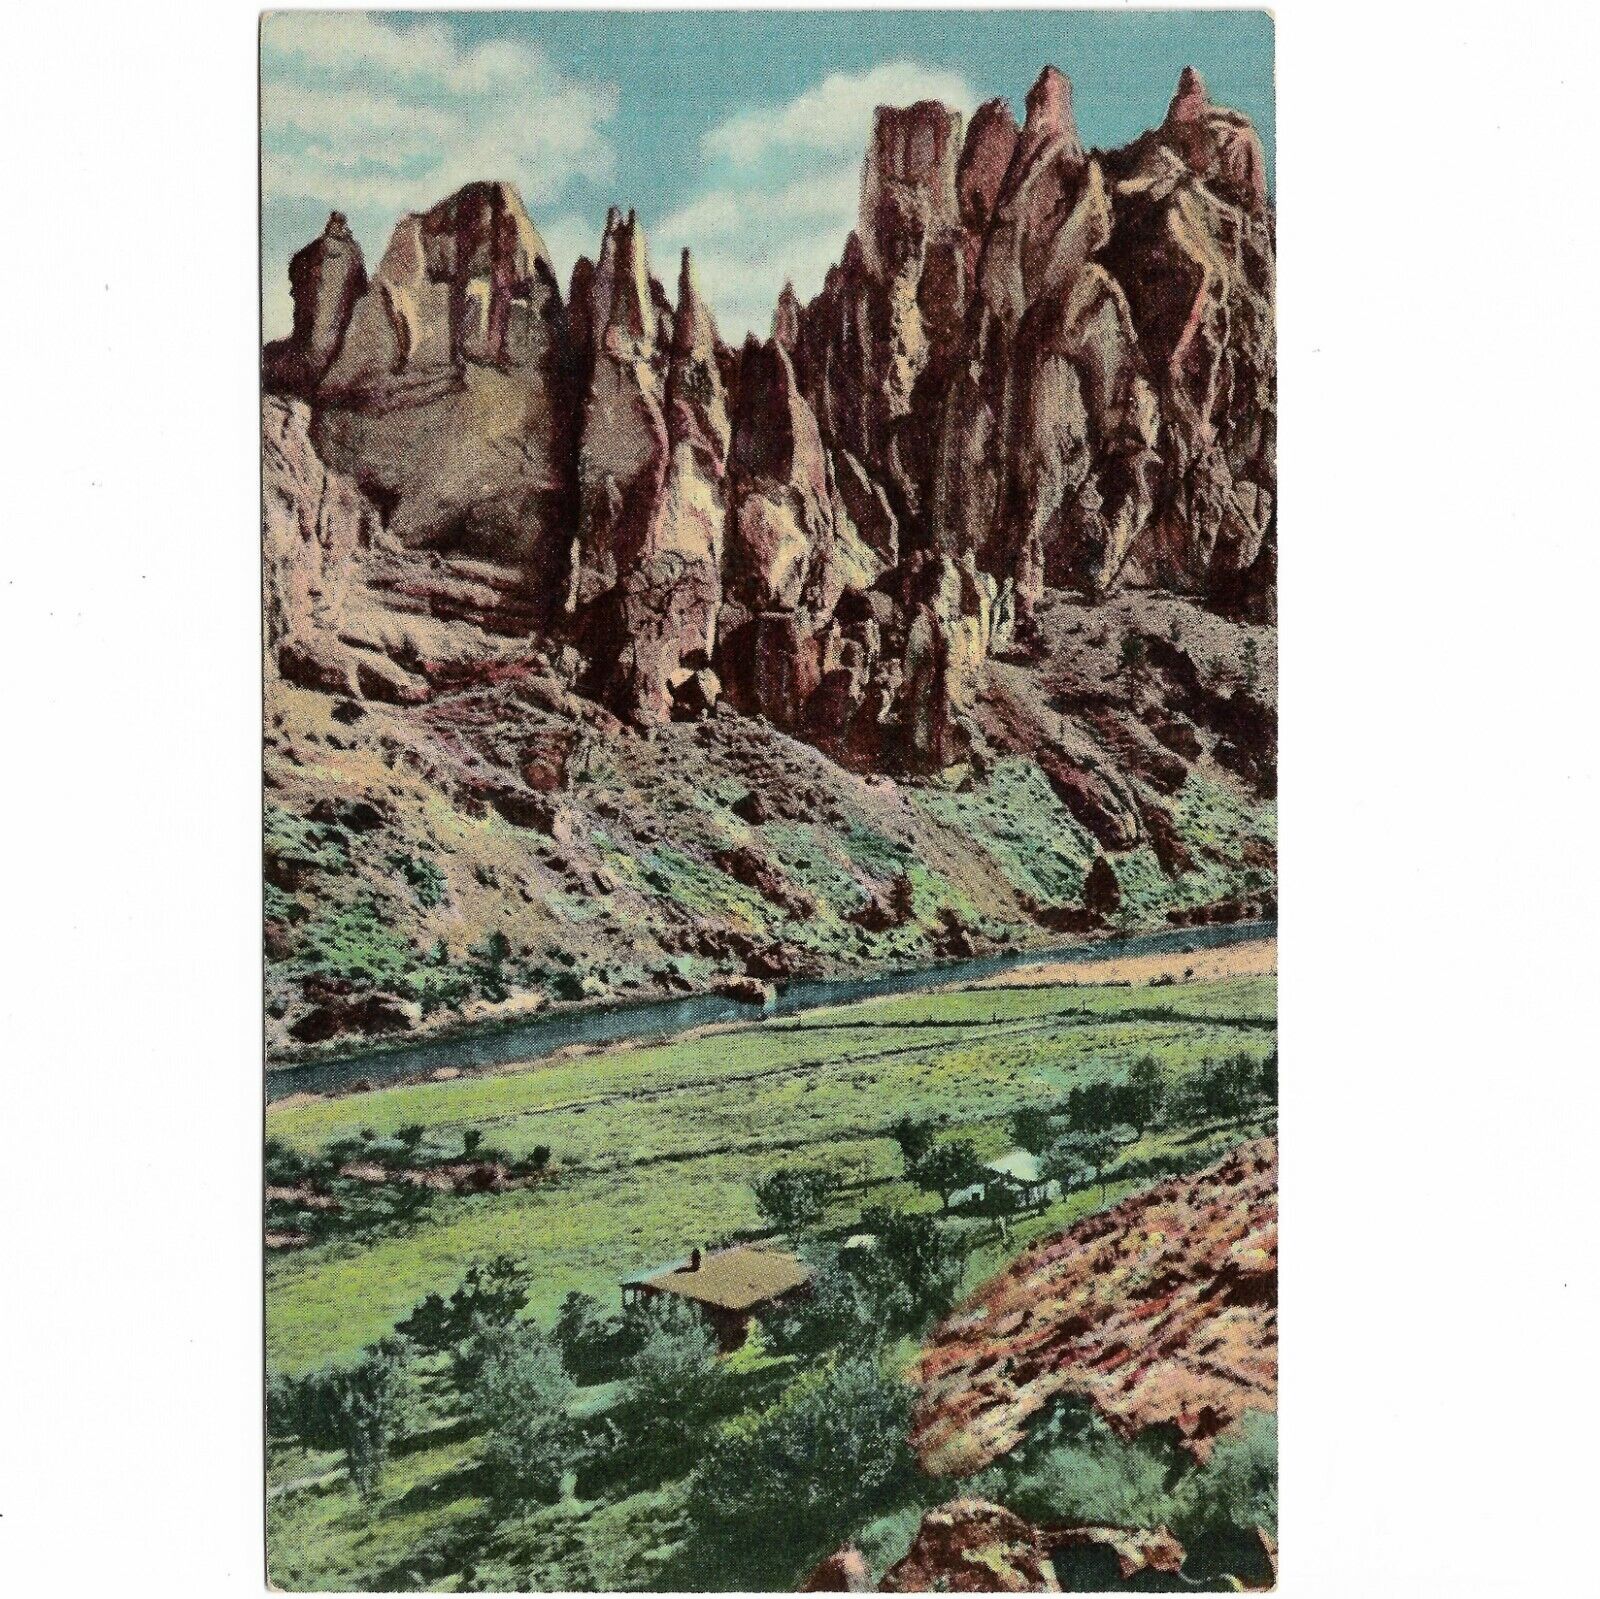 Smith Rocks Crooked River Canyon Oregon - Vintage 1953 Postcard - PC1014